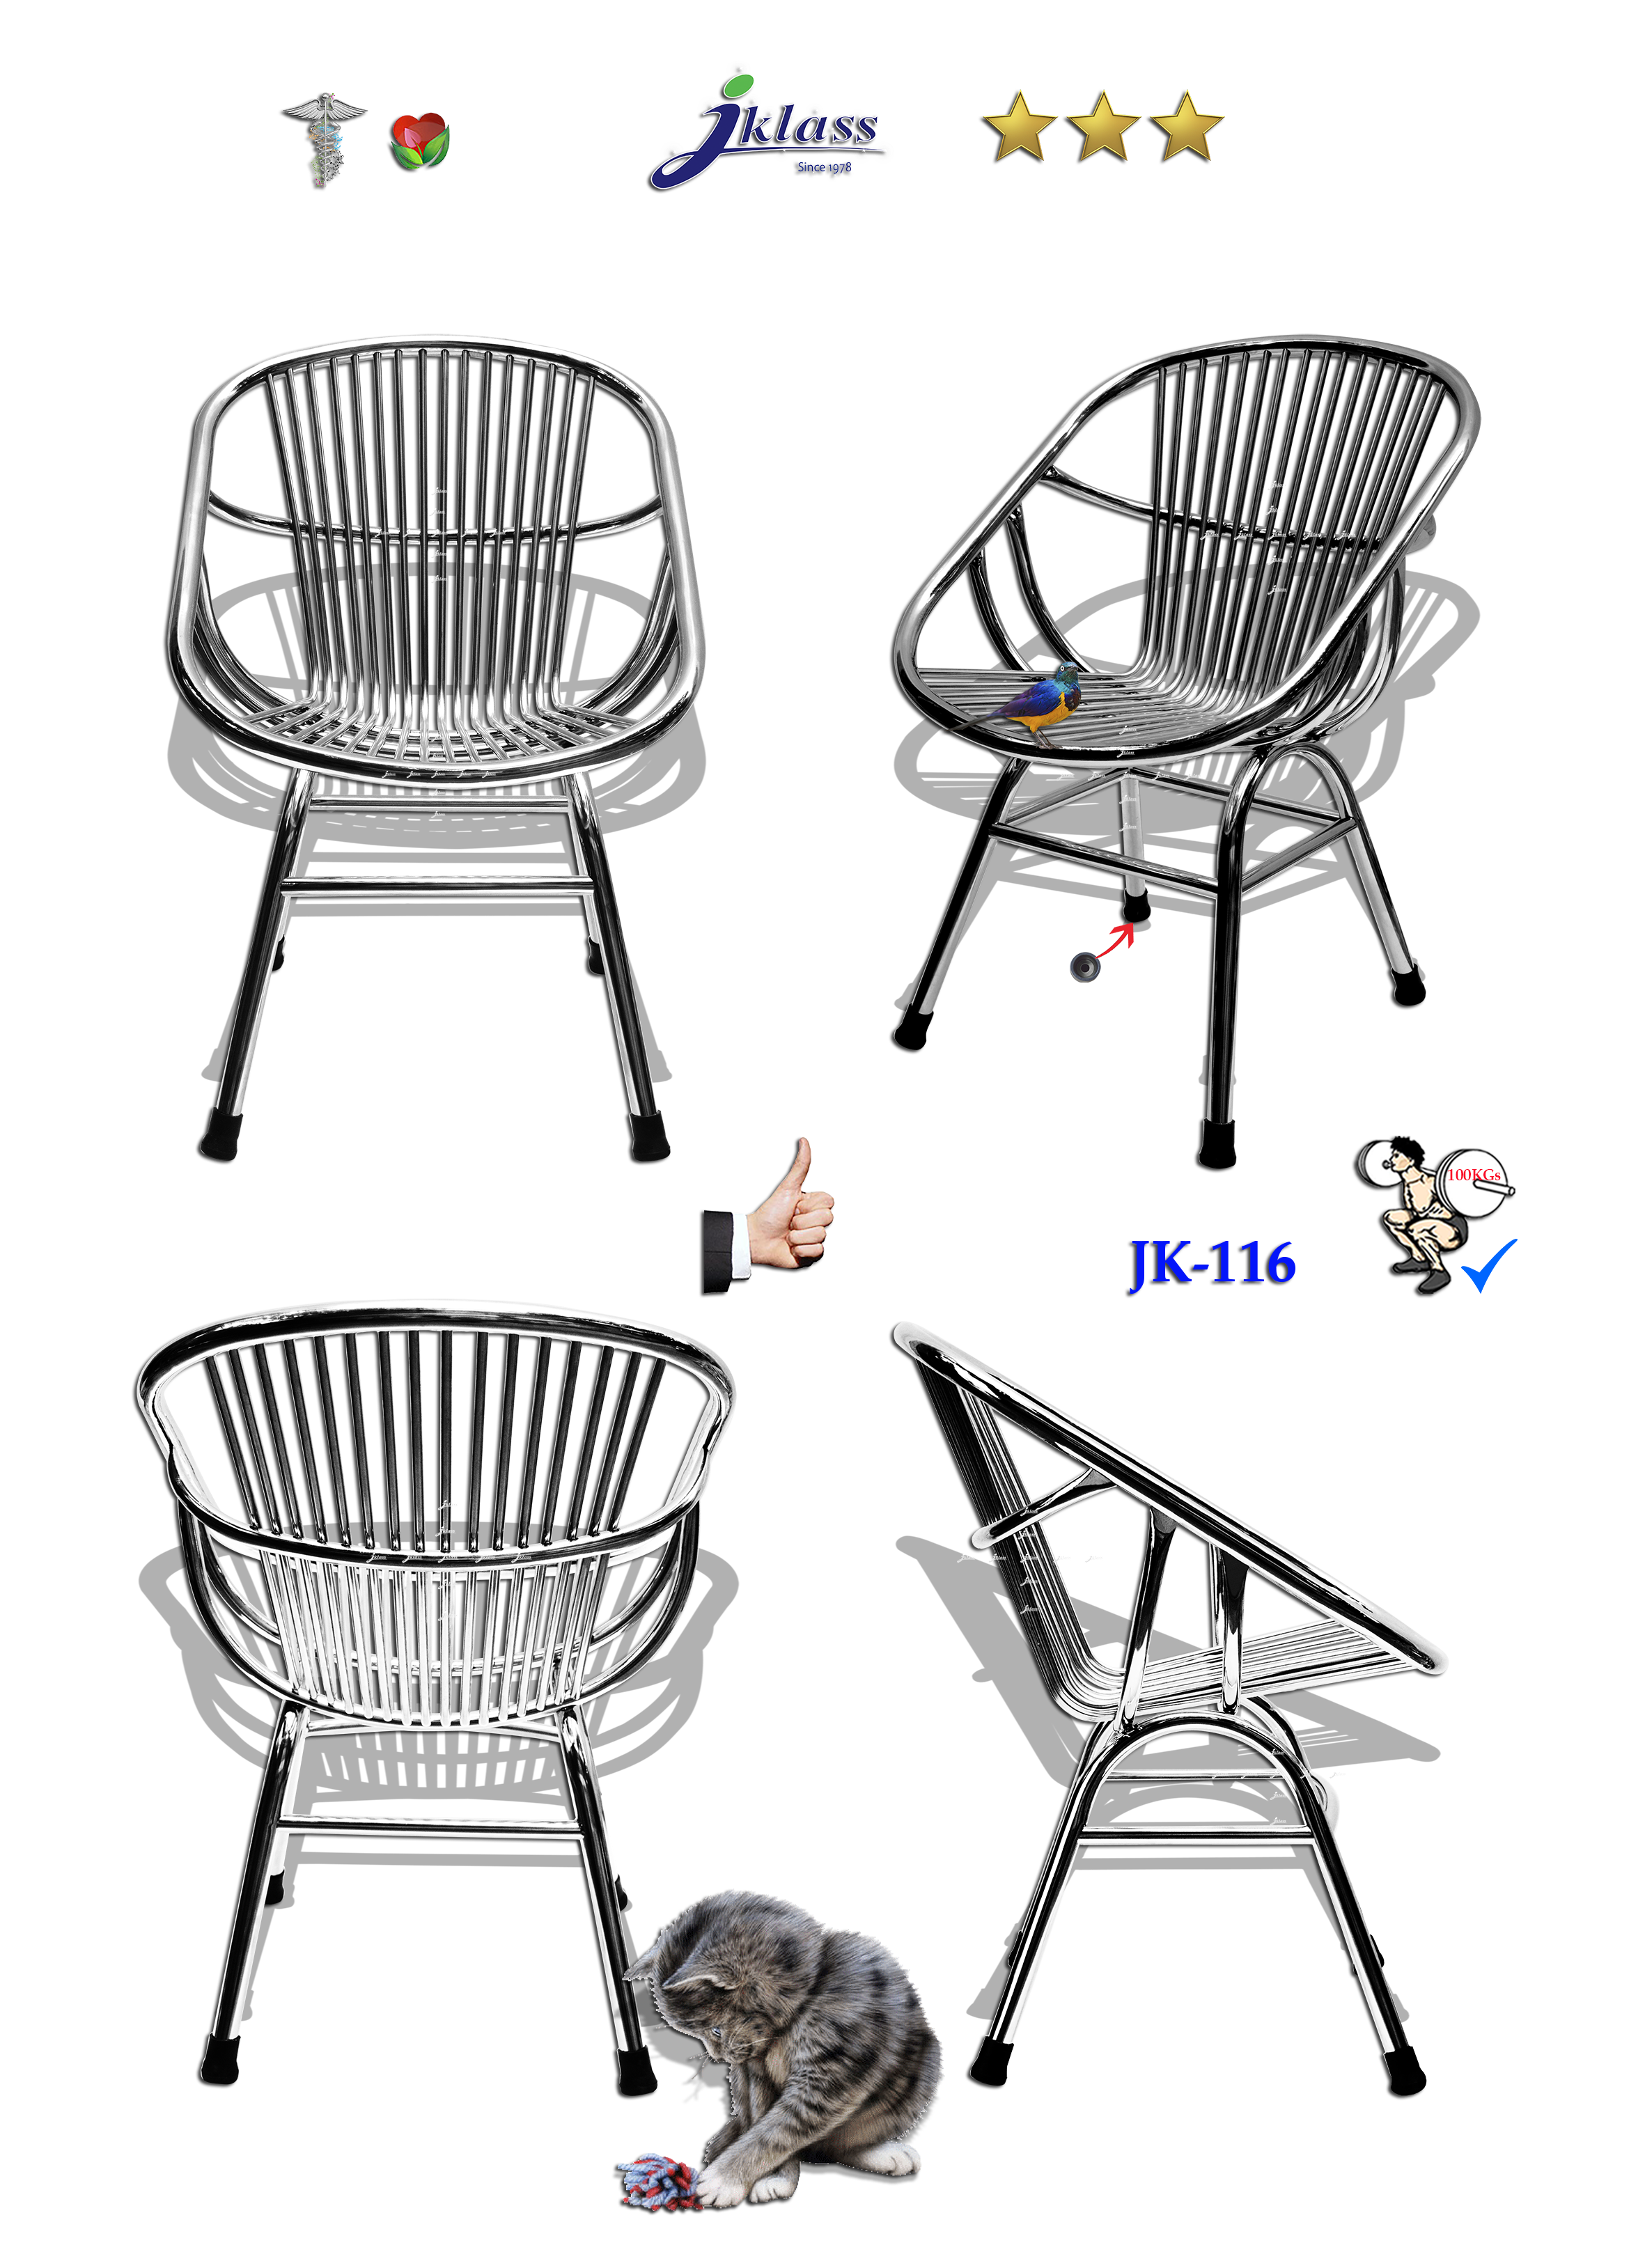 74028::JK-116::A JK stainless steel chair. Dimension (WxDxH) cm : 60x54x32-44(74)